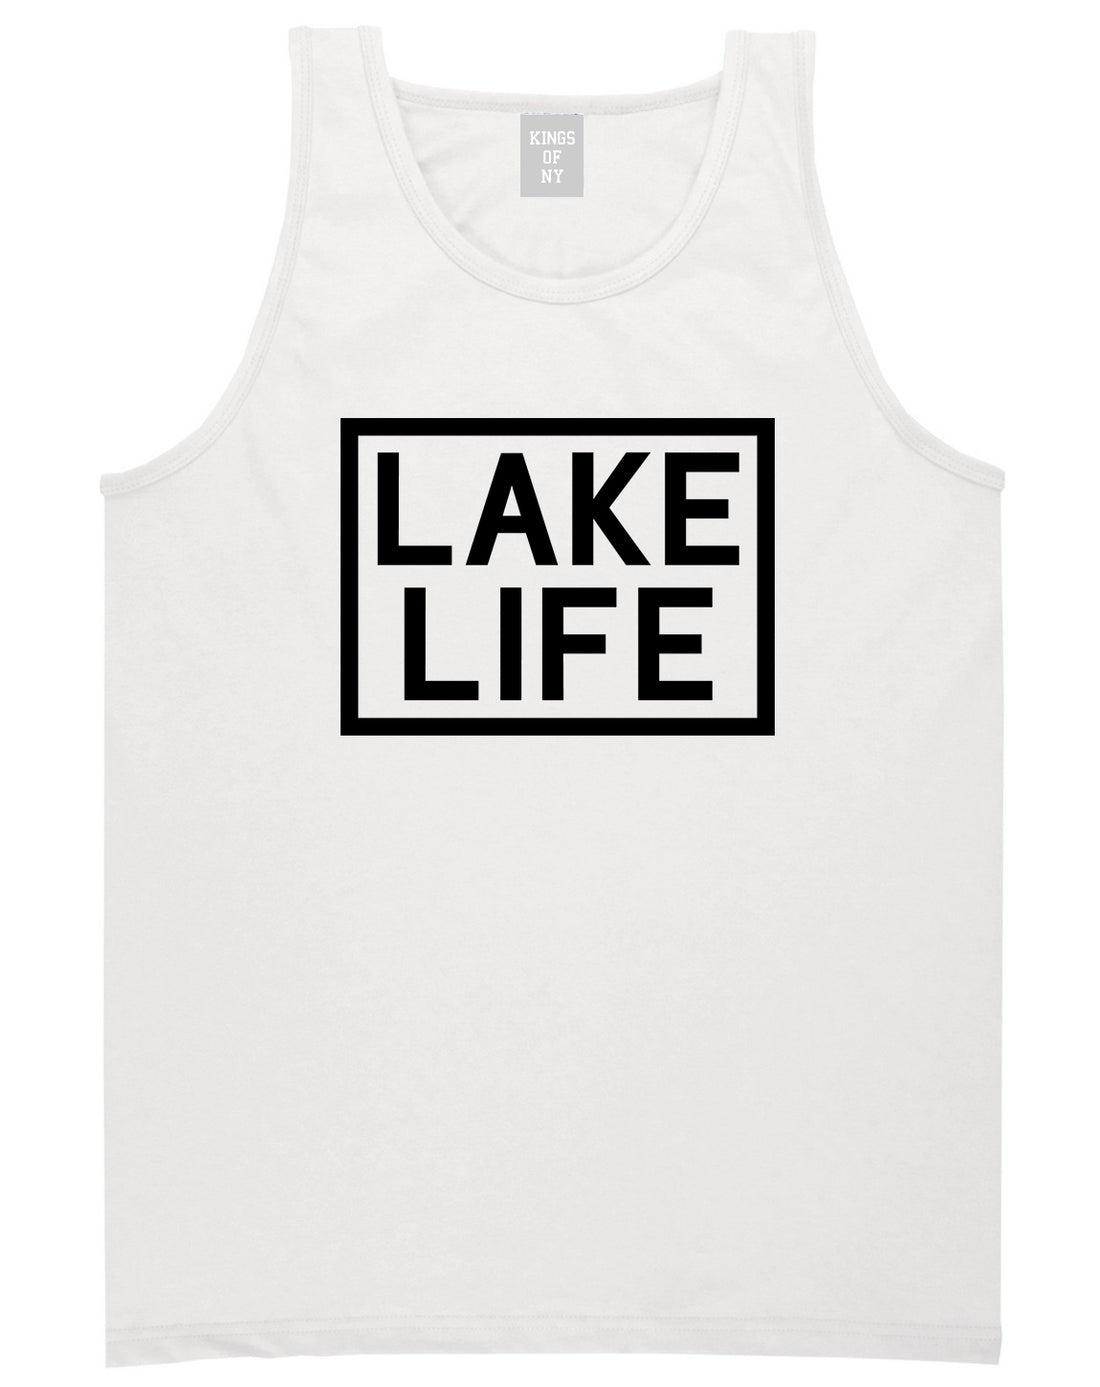 Lake Life Box Mens Tank Top Shirt White